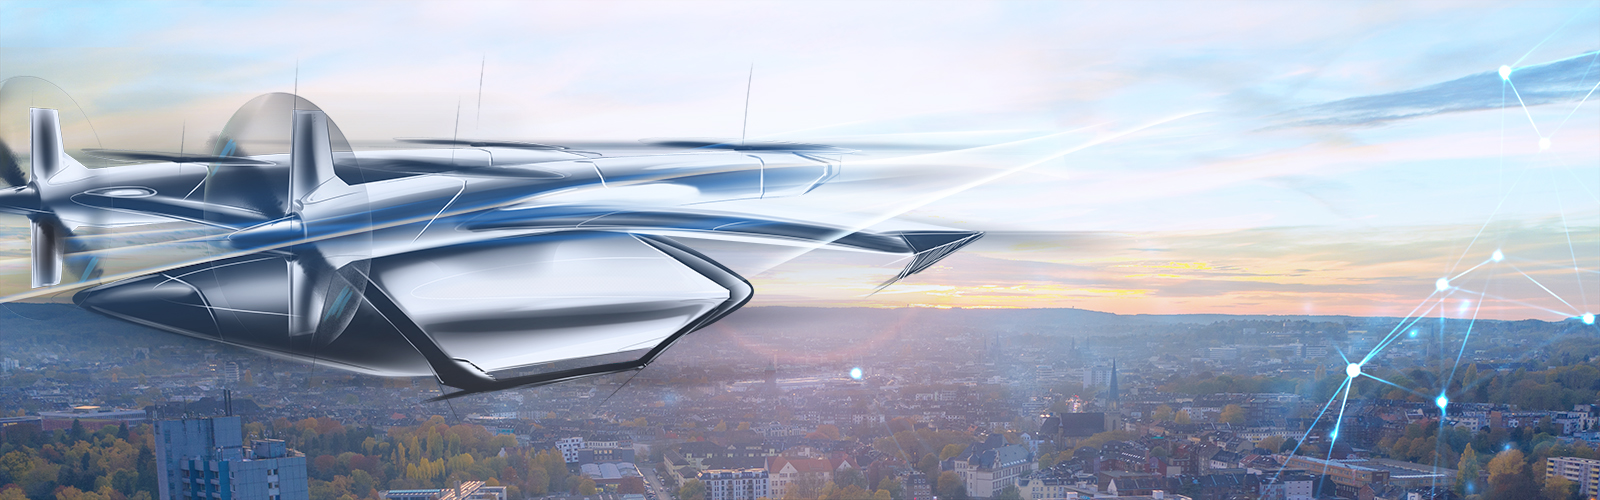 Braunwagner Design Consulting und Services Skycab Forschungsprojekt 2019/20